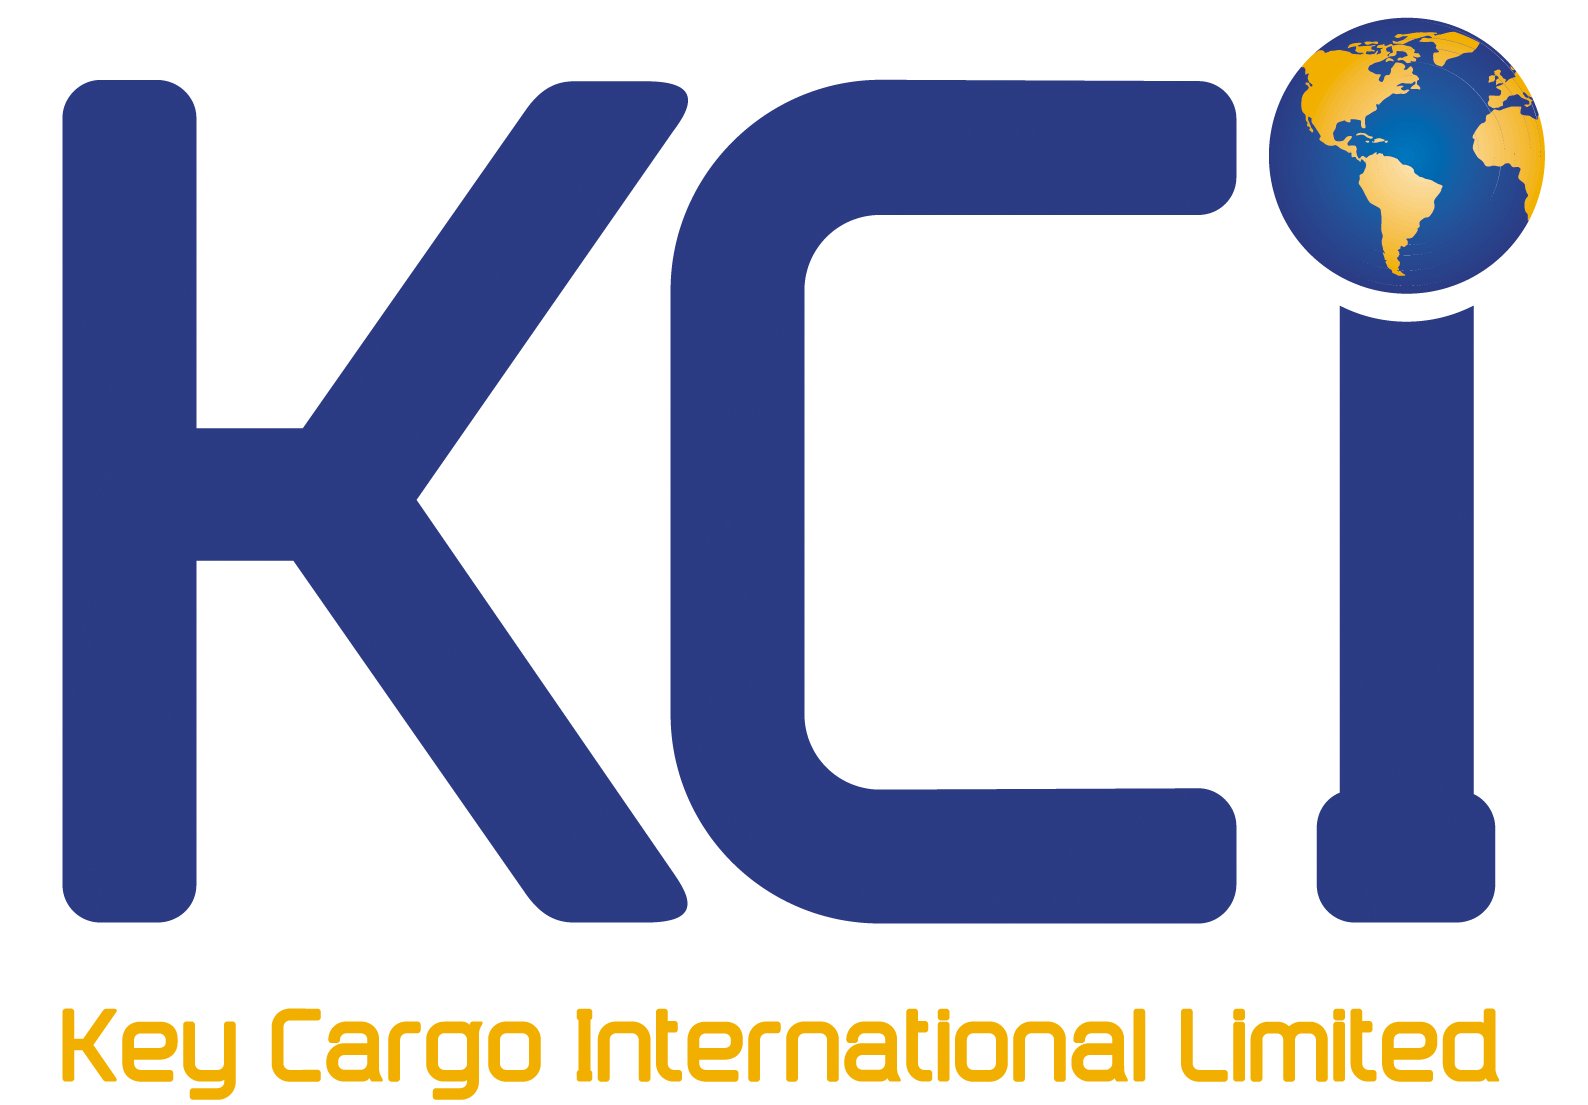 Key Cargo International